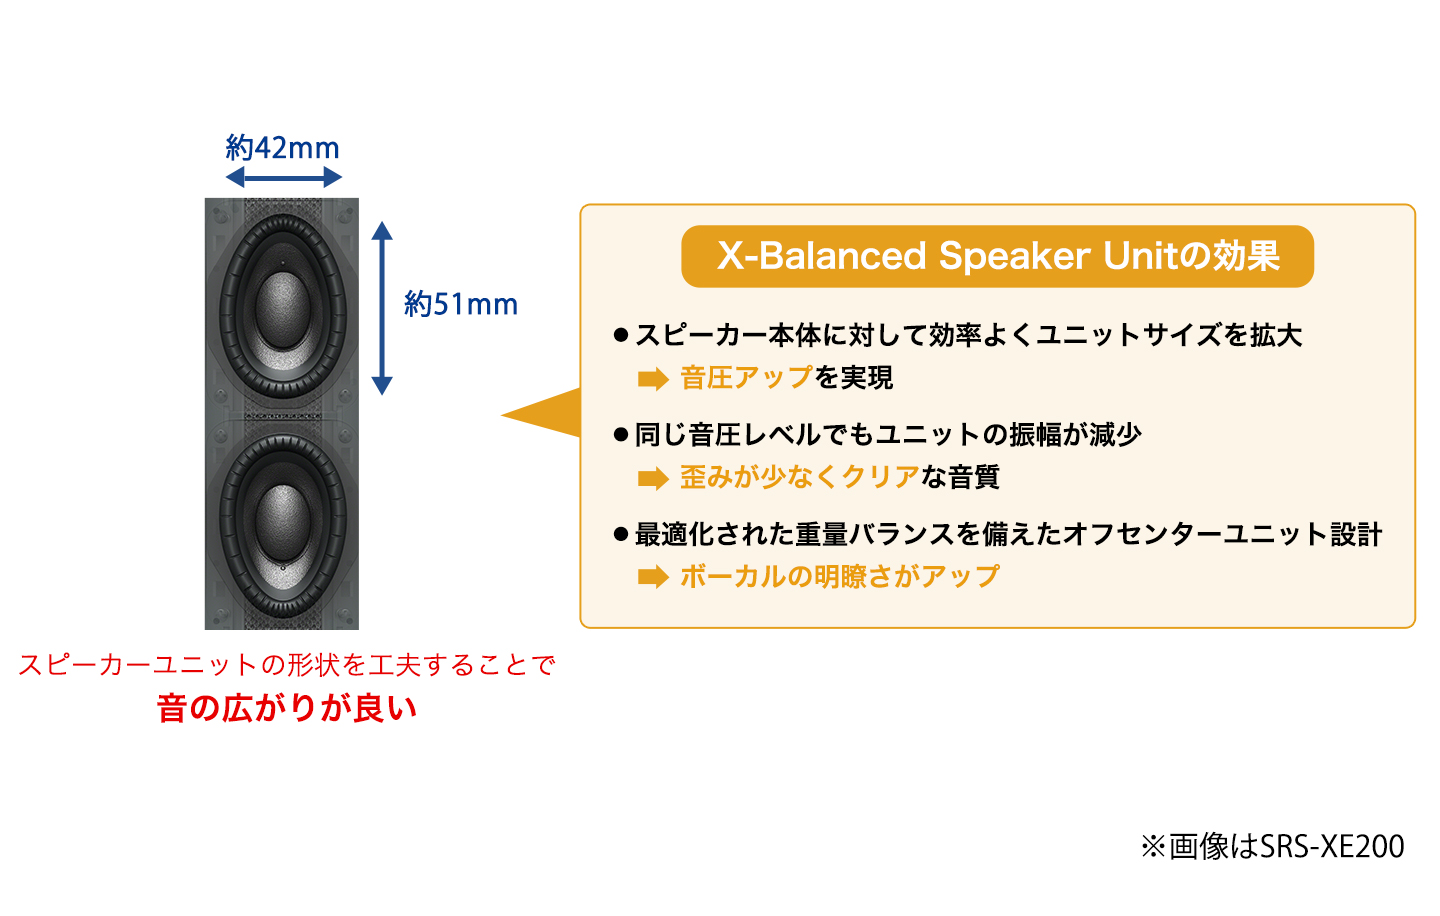 「X-Balanced Speaker Unit」を採用